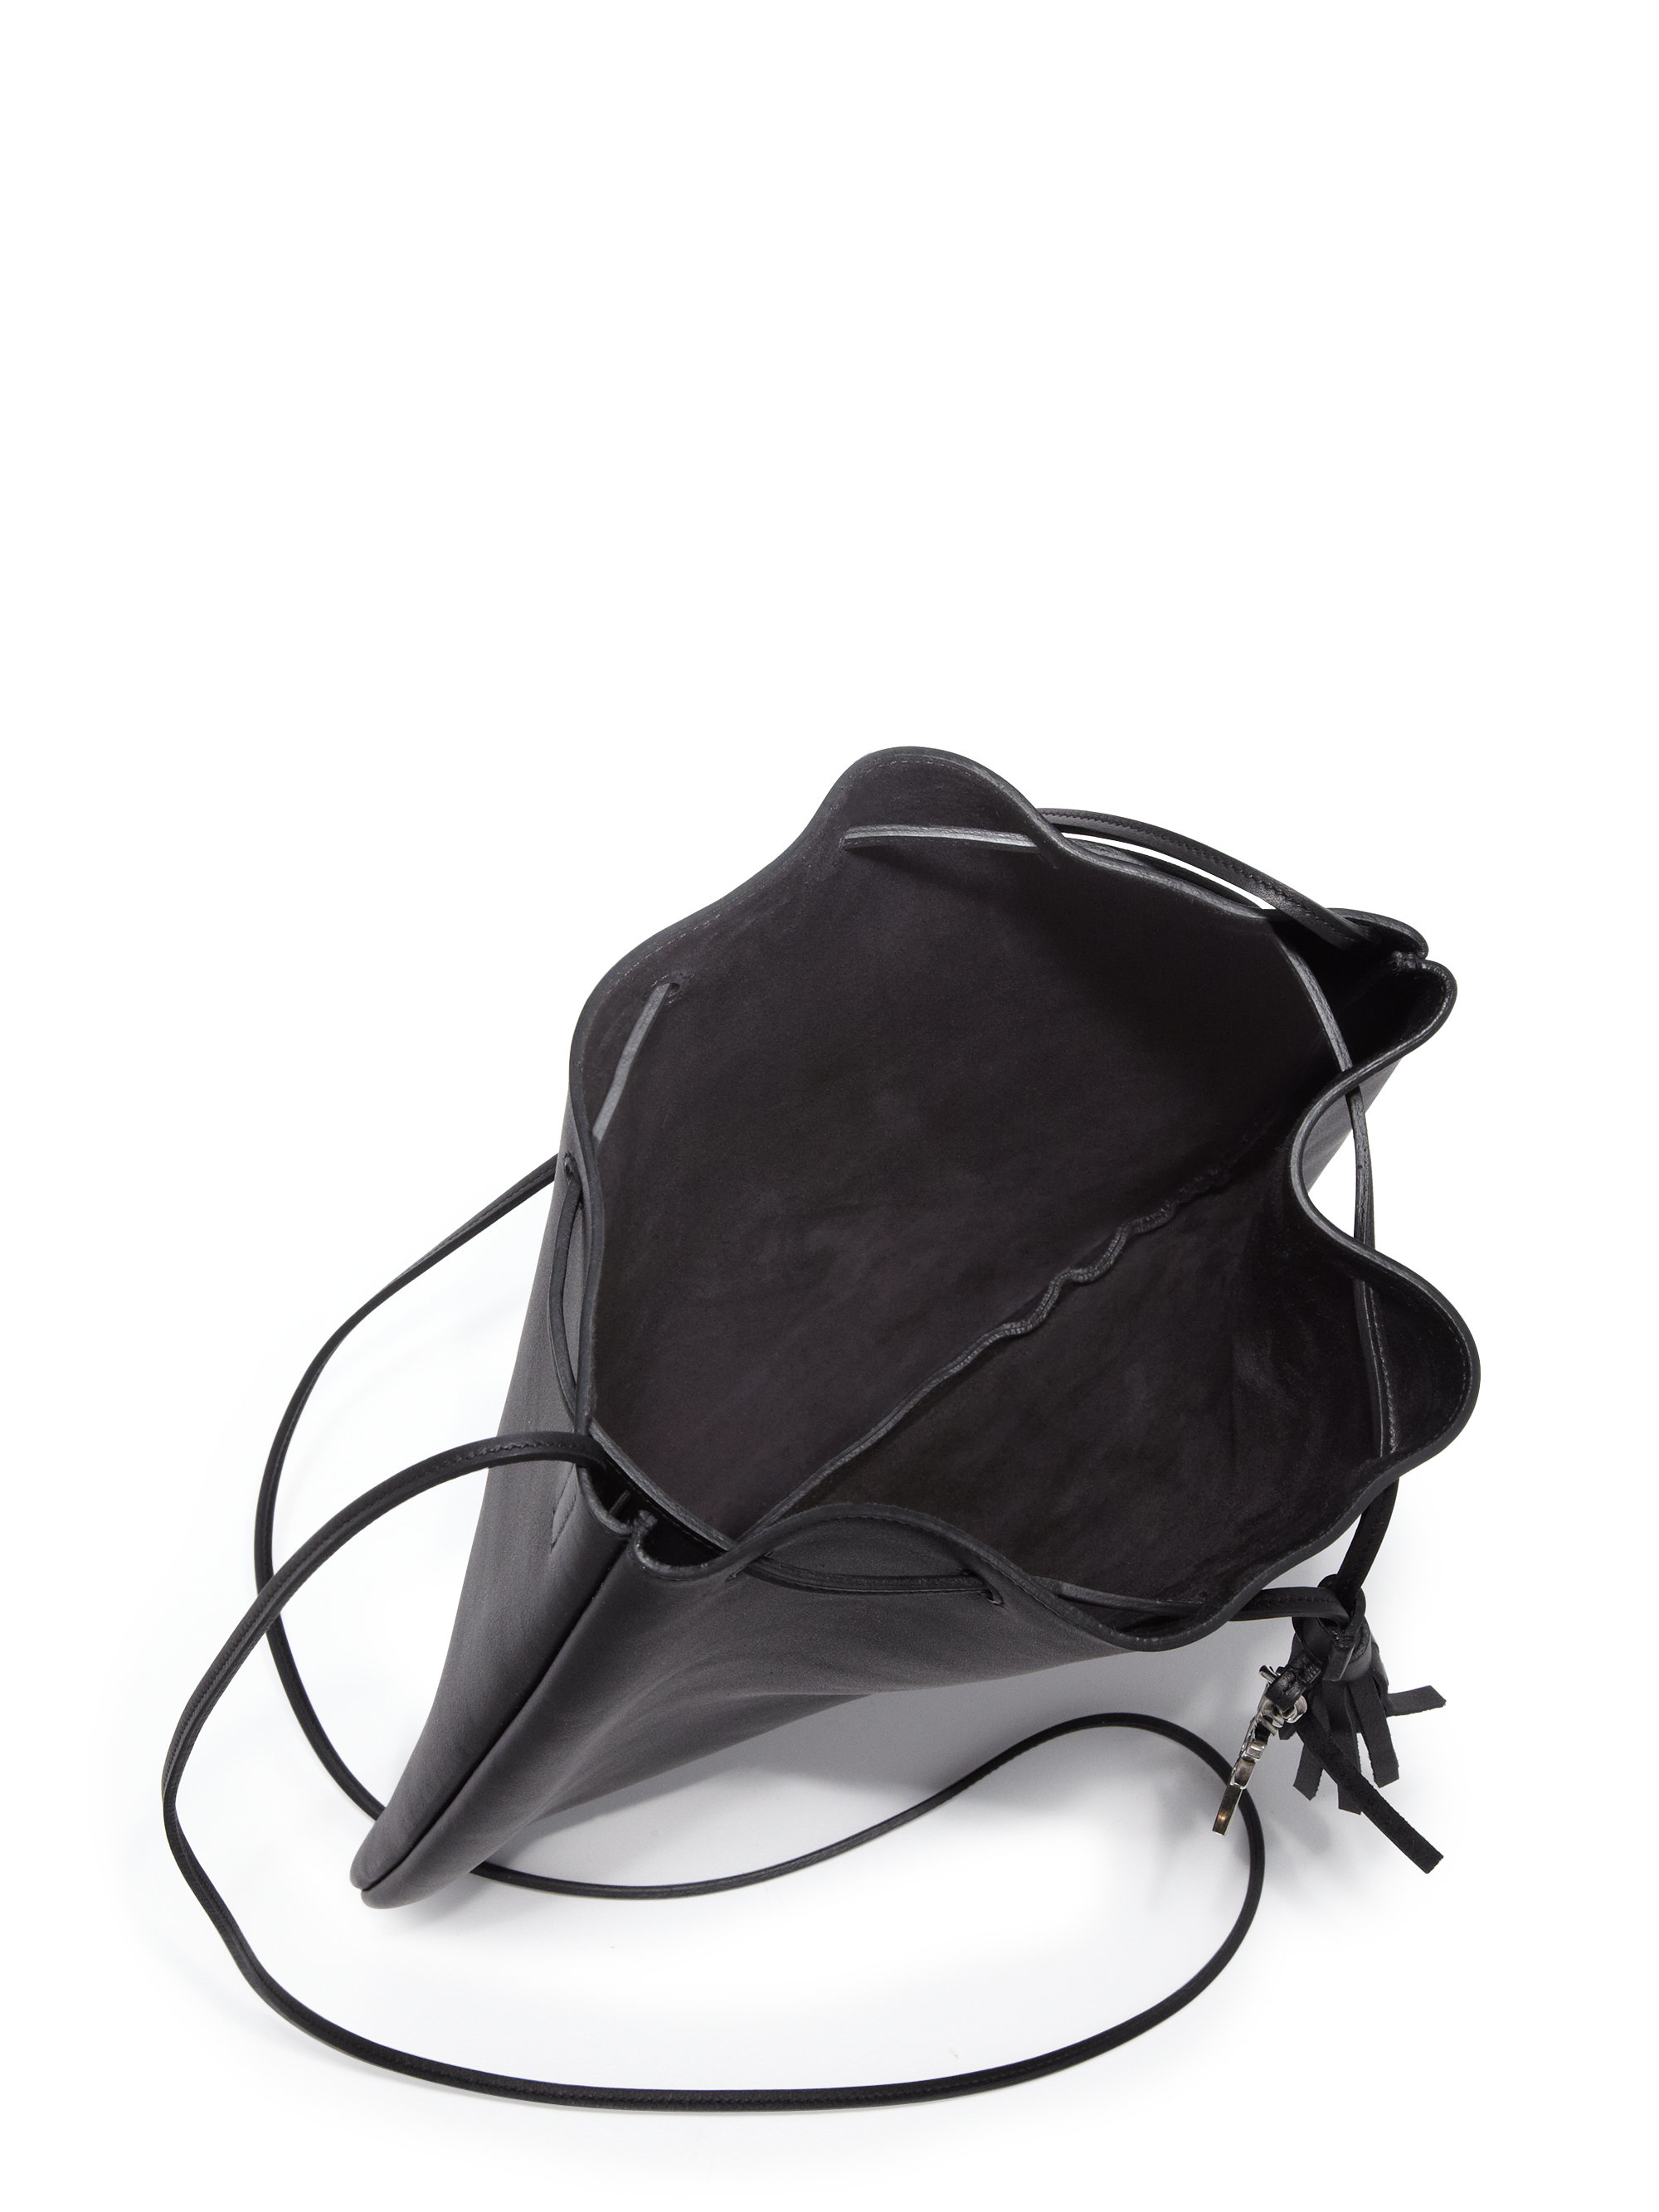 Saint laurent Jen Medium Leather Bucket Bag in Black | Lyst